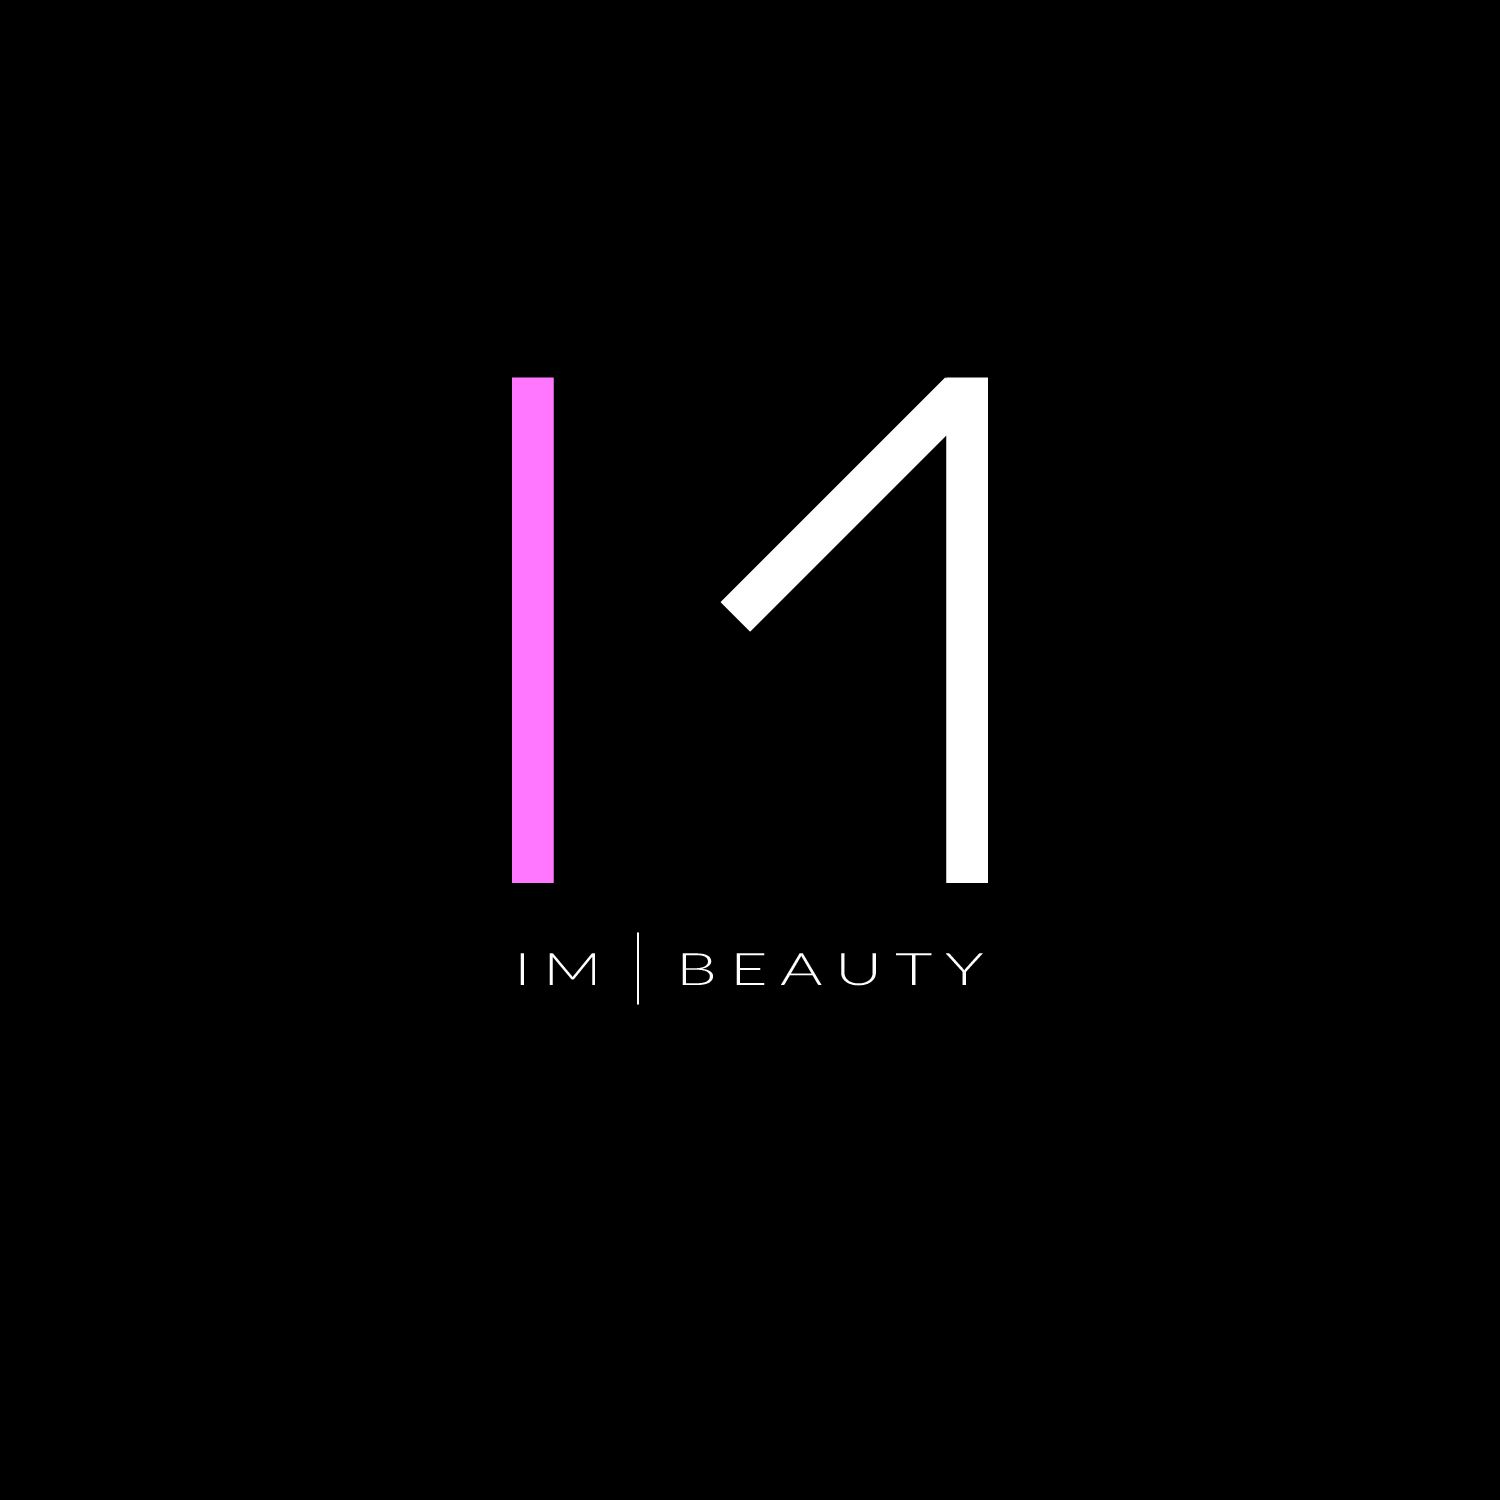 Im Logo - Upmarket, Modern Logo Design for IM beauty by Jason Brown | Design ...